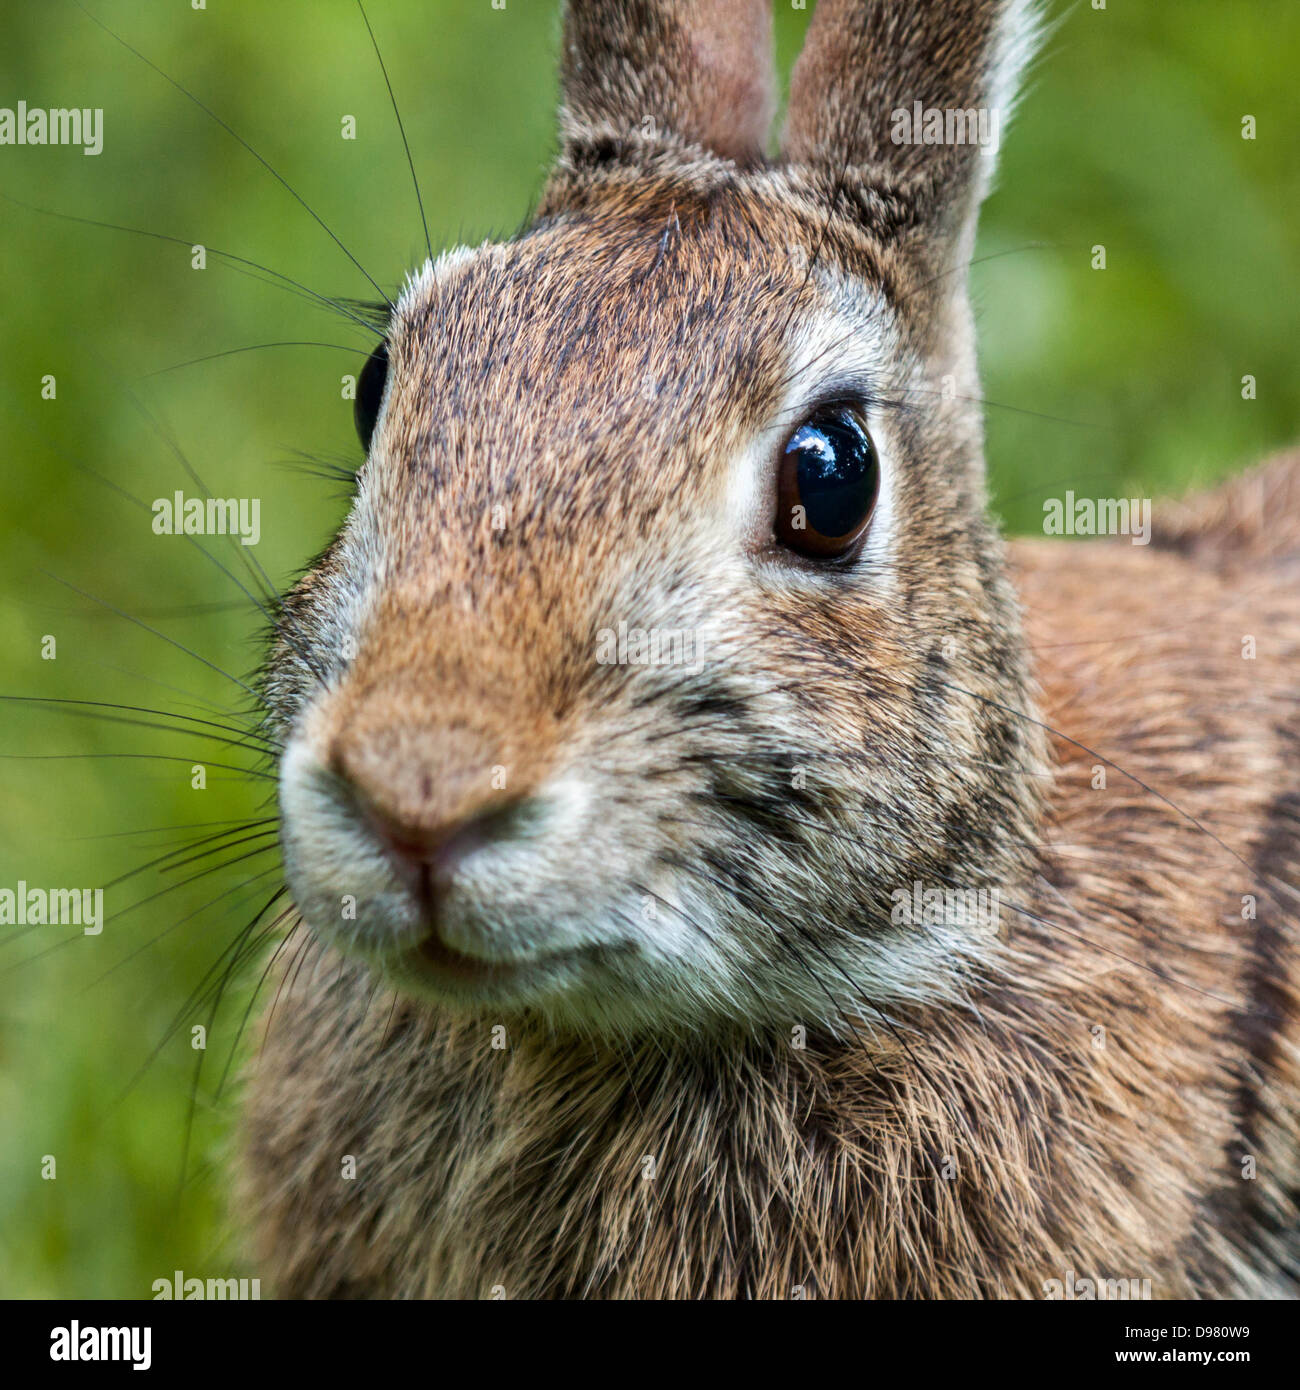 Closeup of wild eastern brown rabbit Stock Photo